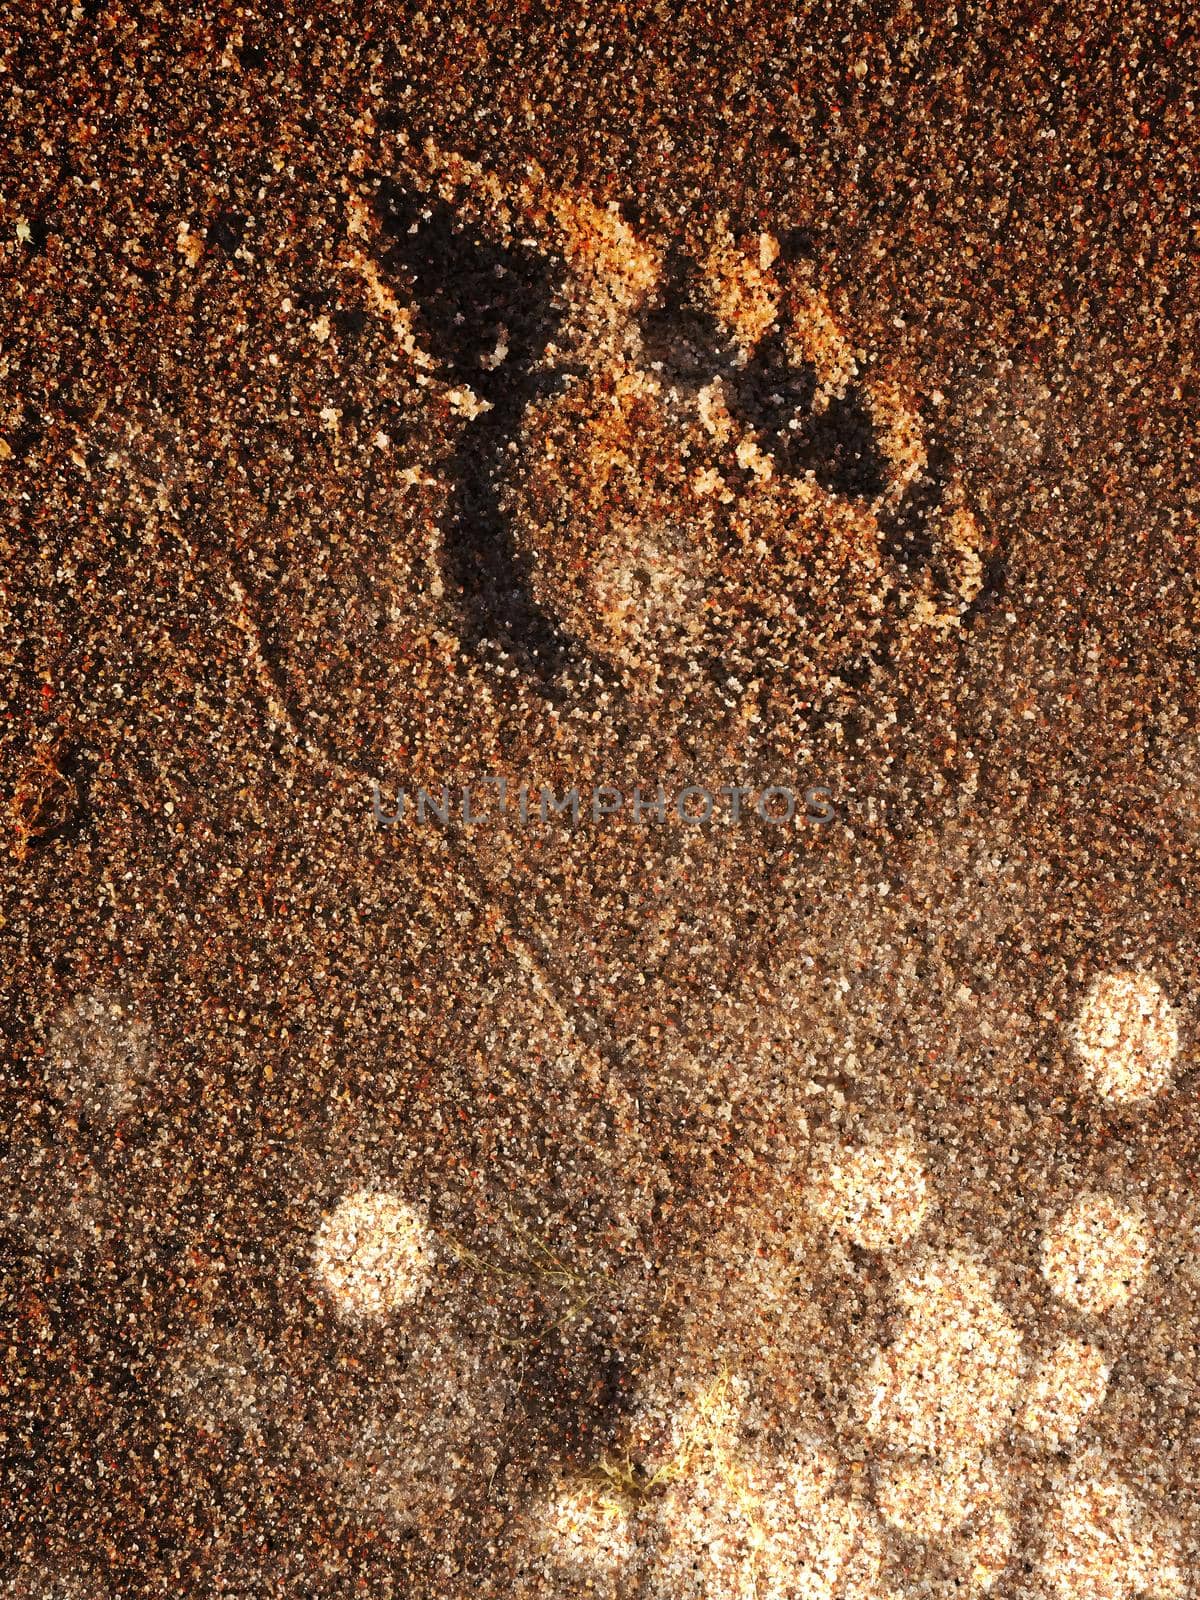 Footprints on sand. Human imprints, prints, tracks on sandy surface. Barefoot, feet, toes marks. Vacation travel wanderlust  by rdonar2